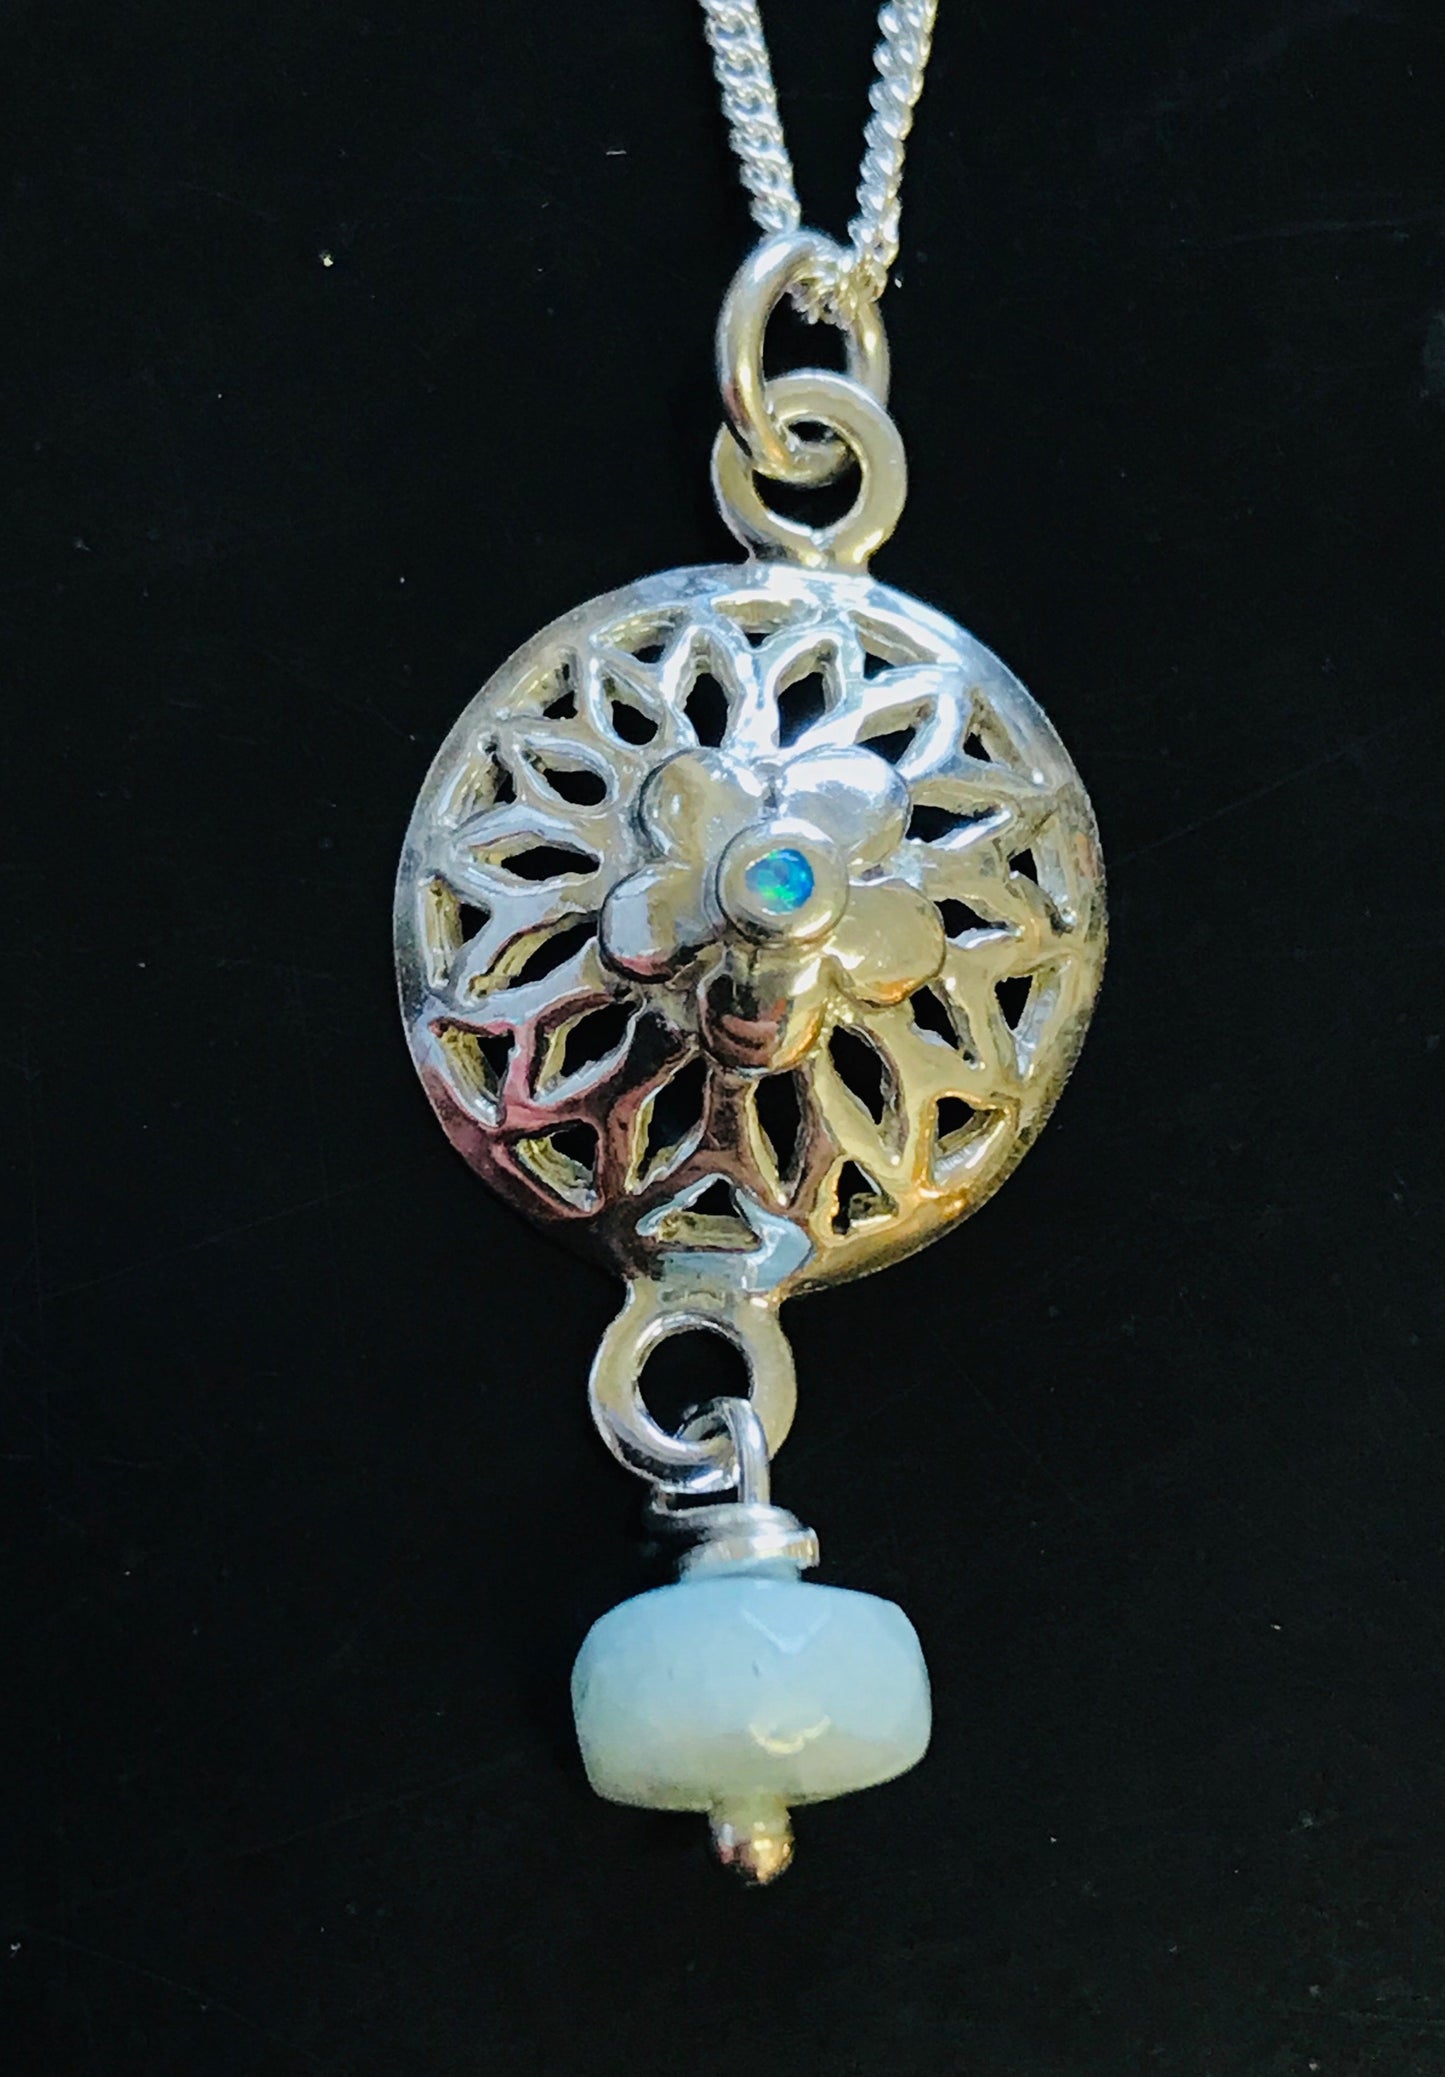 Mandala necklace with flower